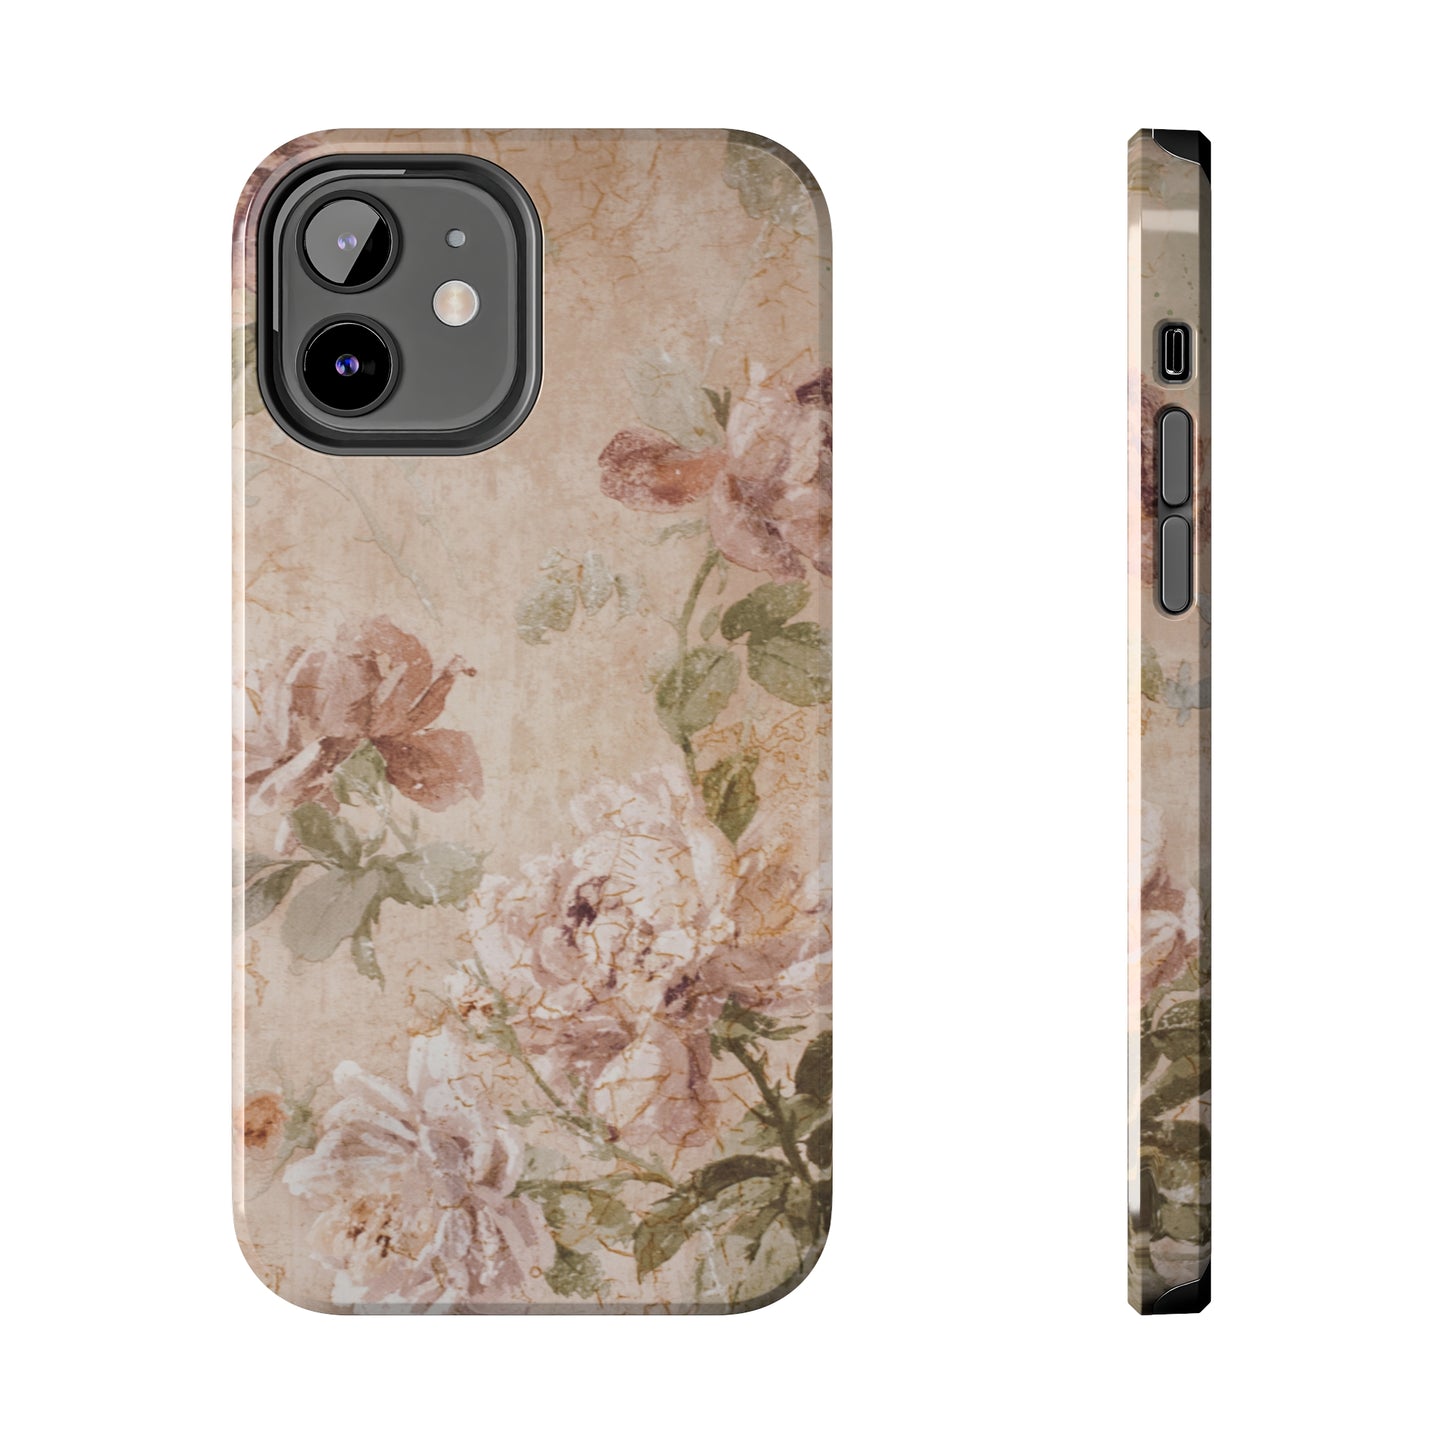 Vintage Floral iPhone case